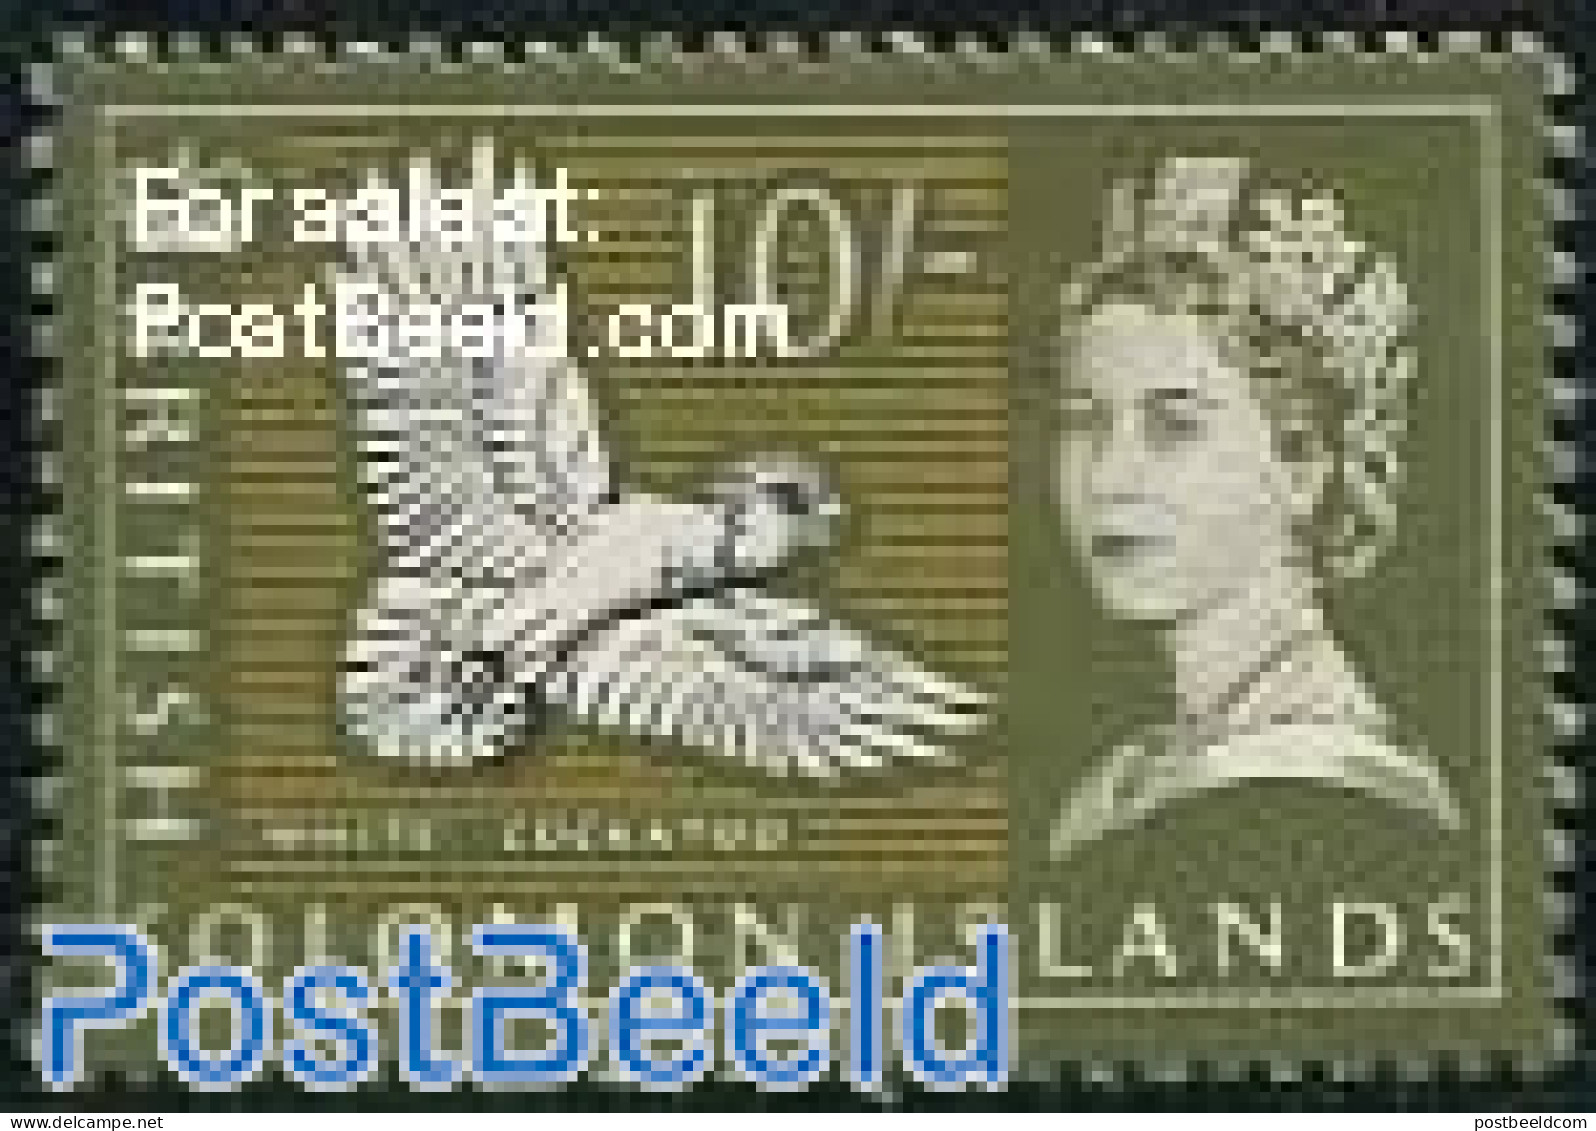 Solomon Islands 1965 10Sh, Stamp Out Of Set, Mint NH, Nature - Birds - Salomon (Iles 1978-...)